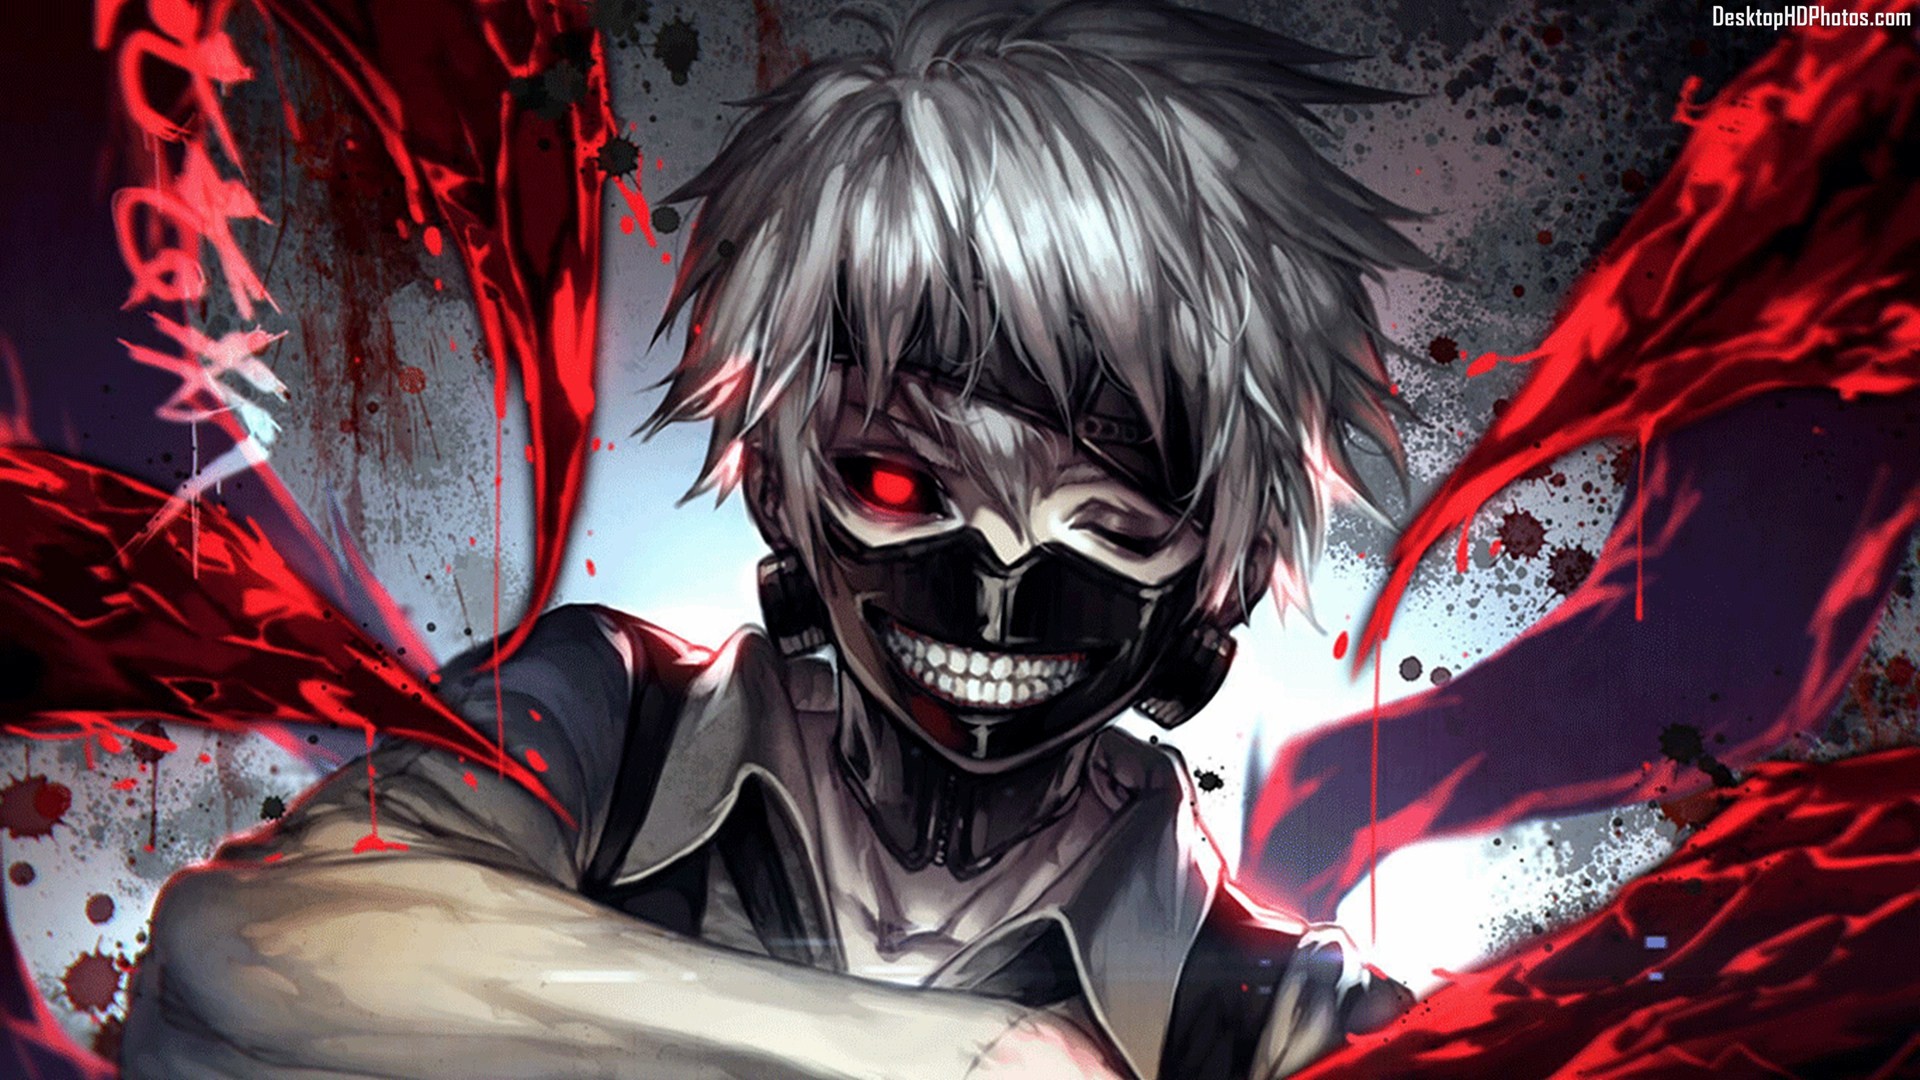 kaneki wallpaper,fictional character,cg artwork,anime,demon,illustration